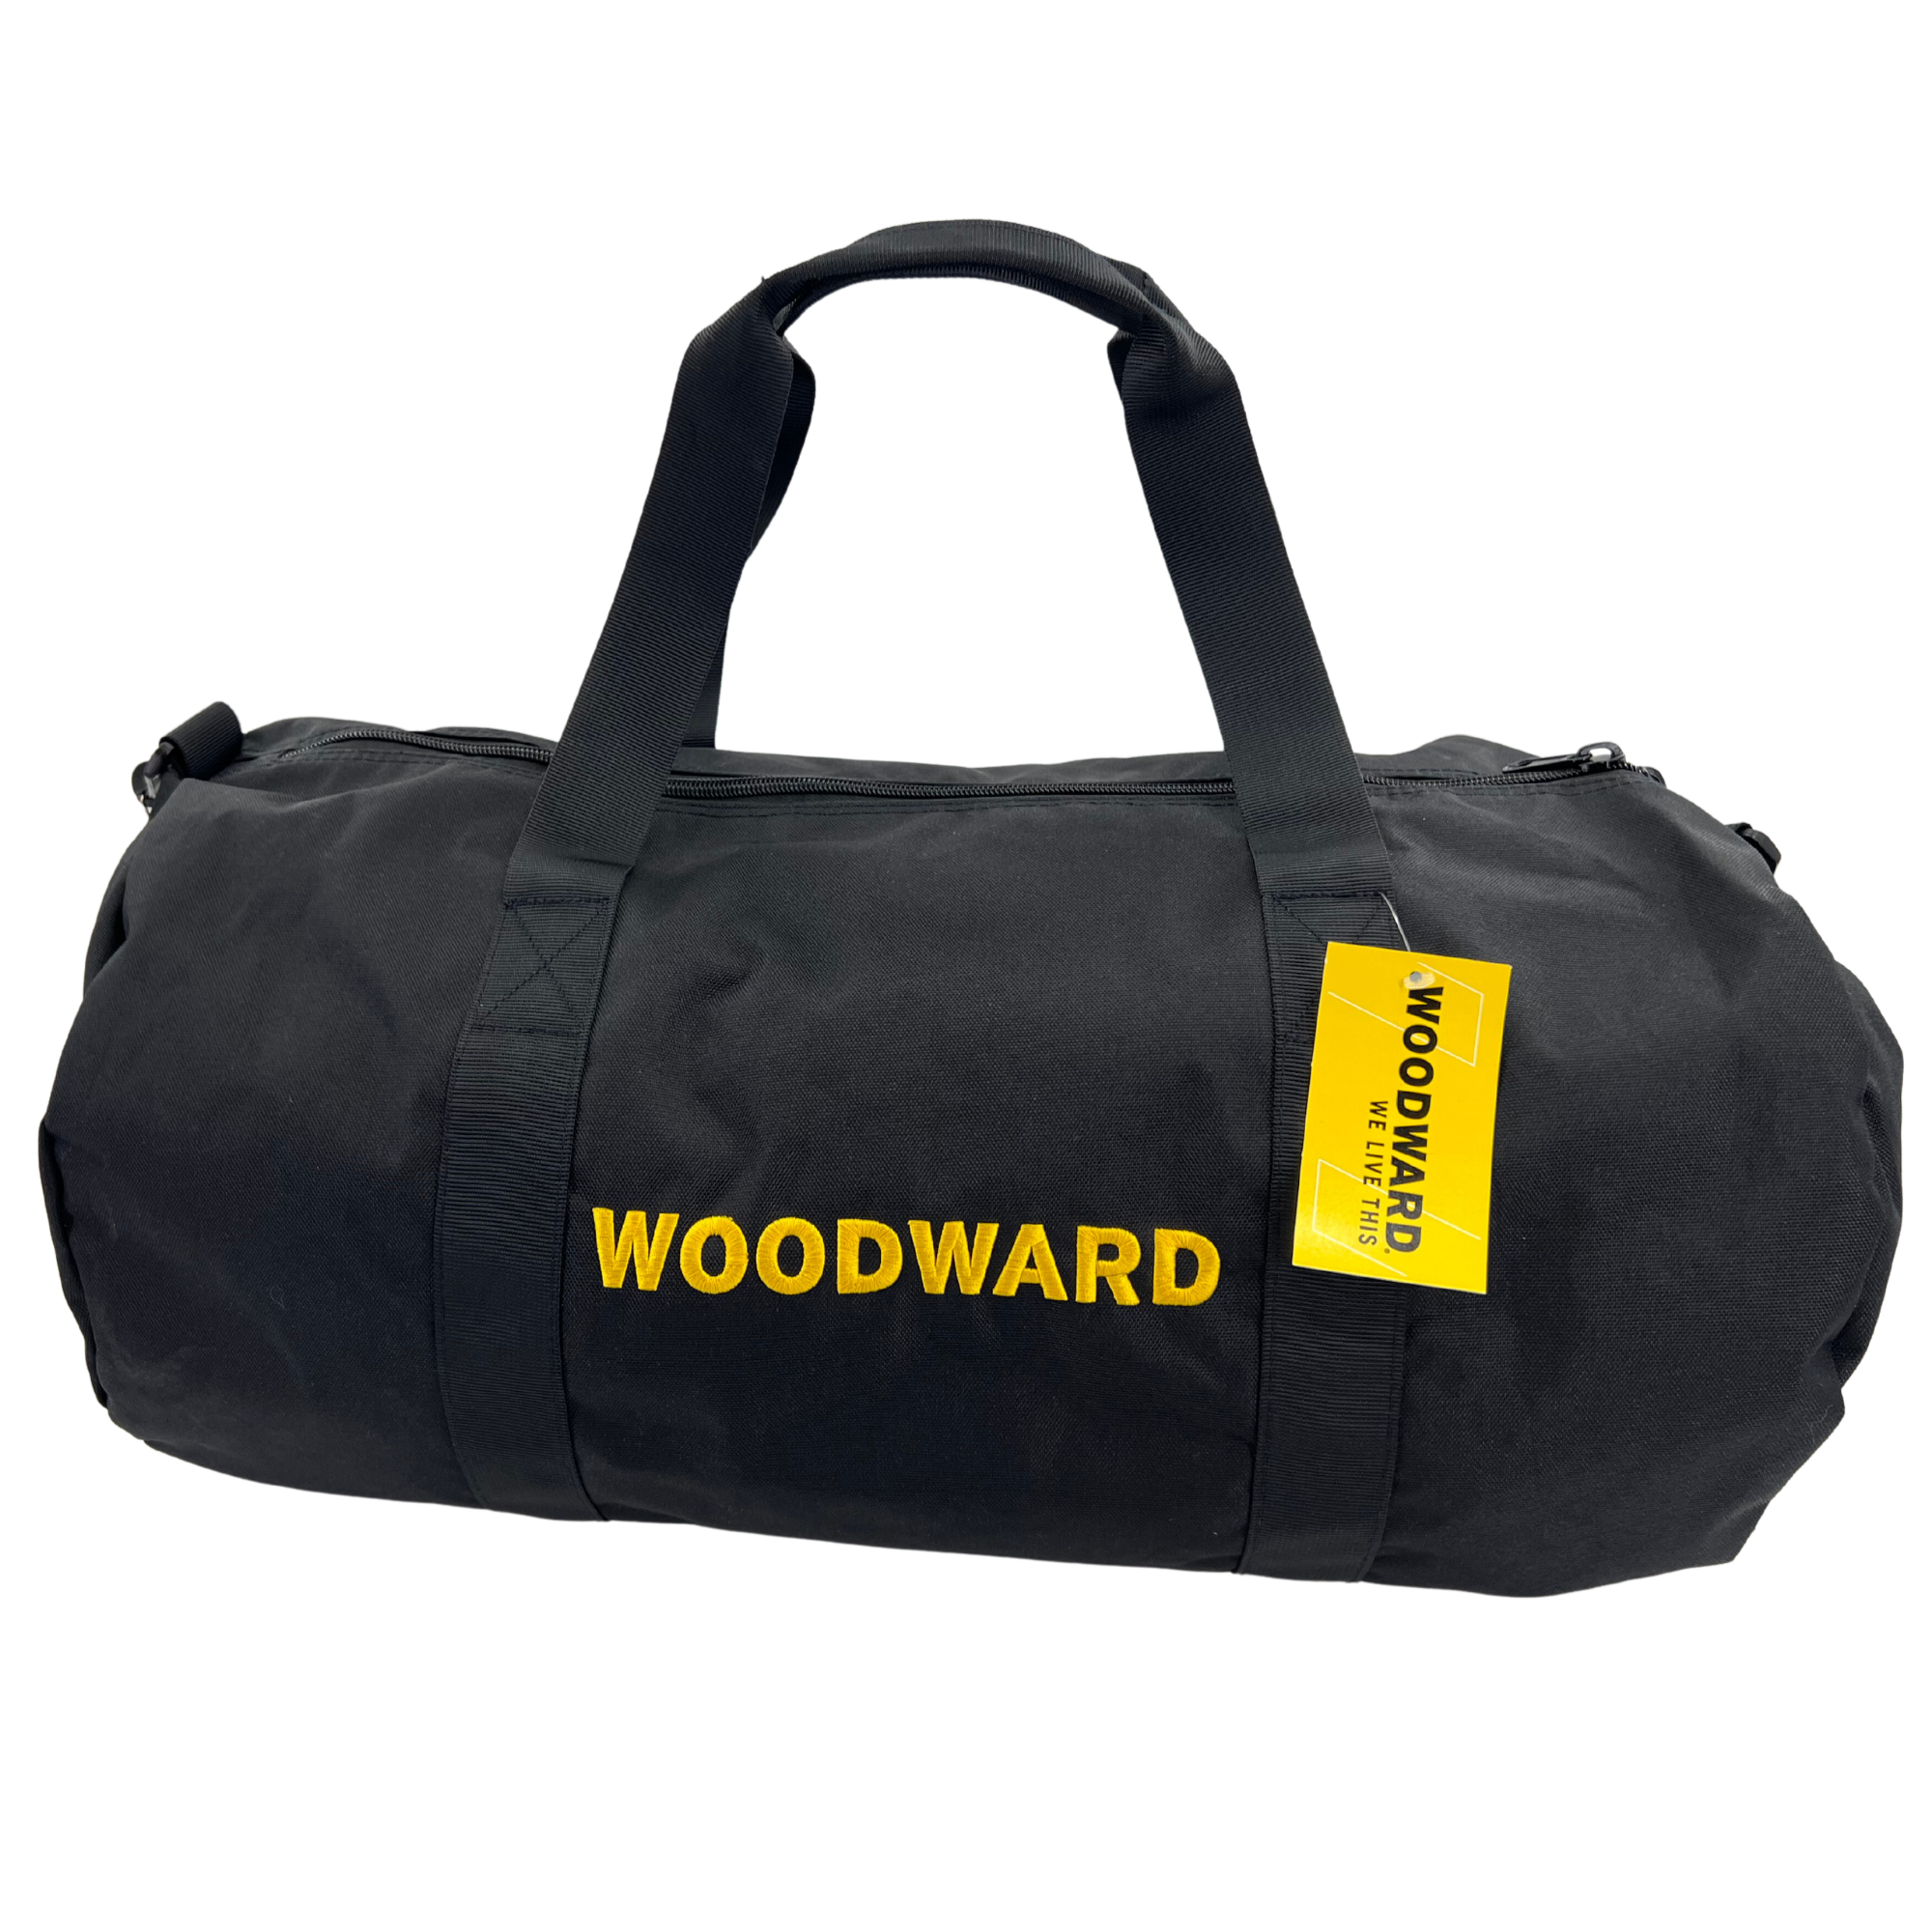 Woodward Duffle Bag